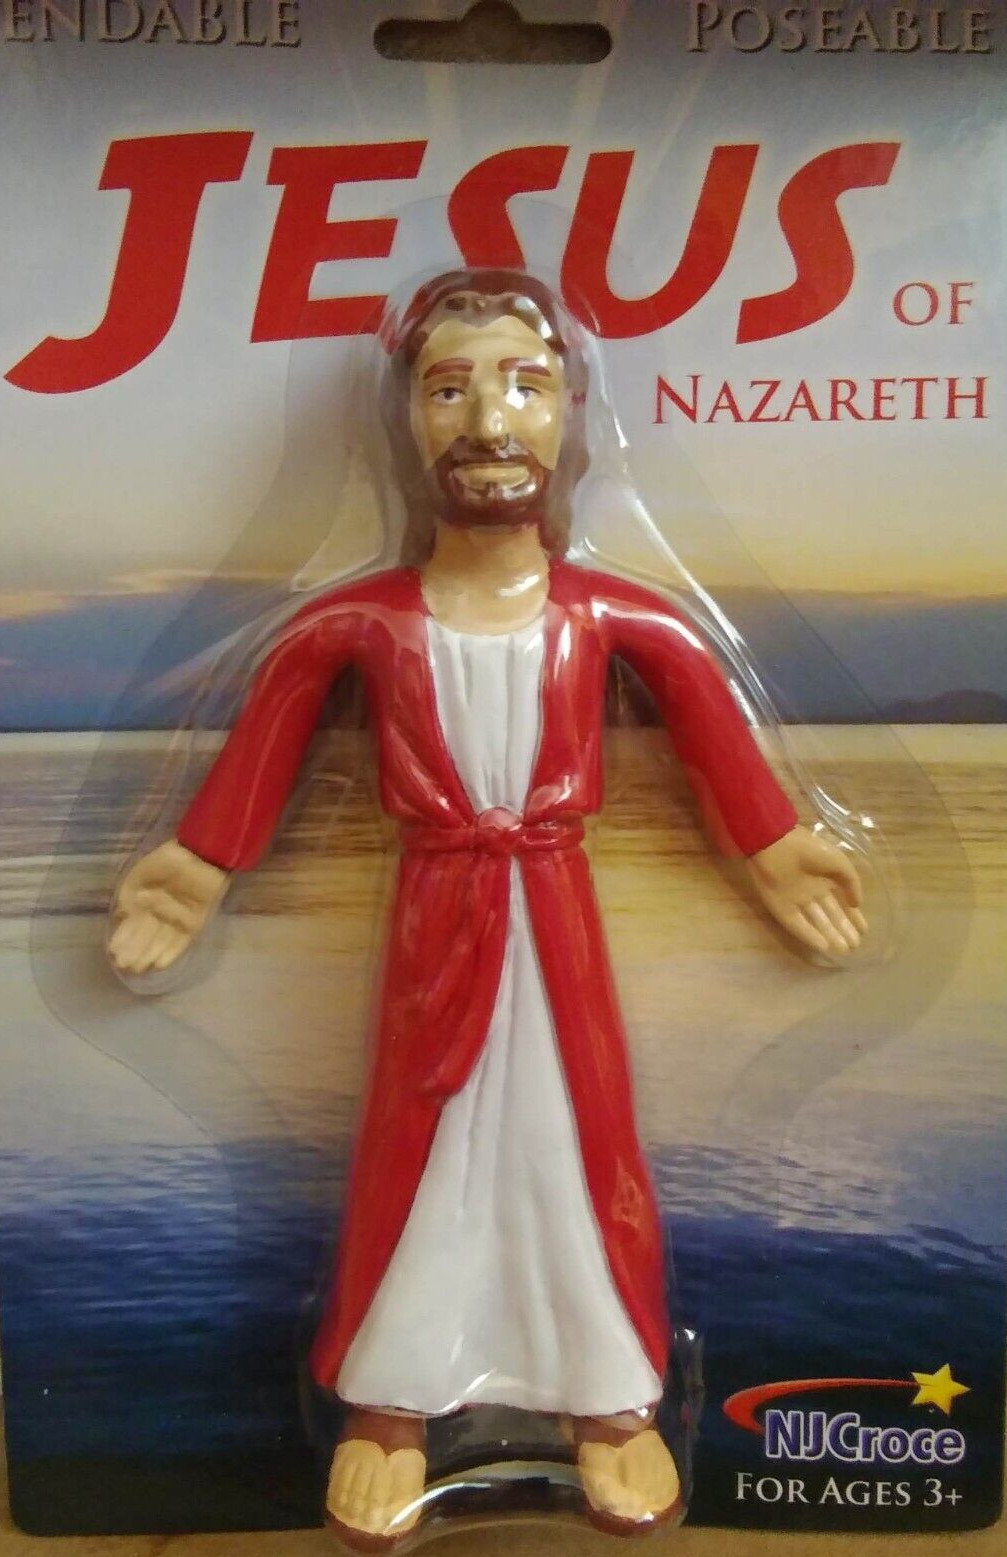 Jesus of Nazareth Bendable / Poseable Action Figure 6\